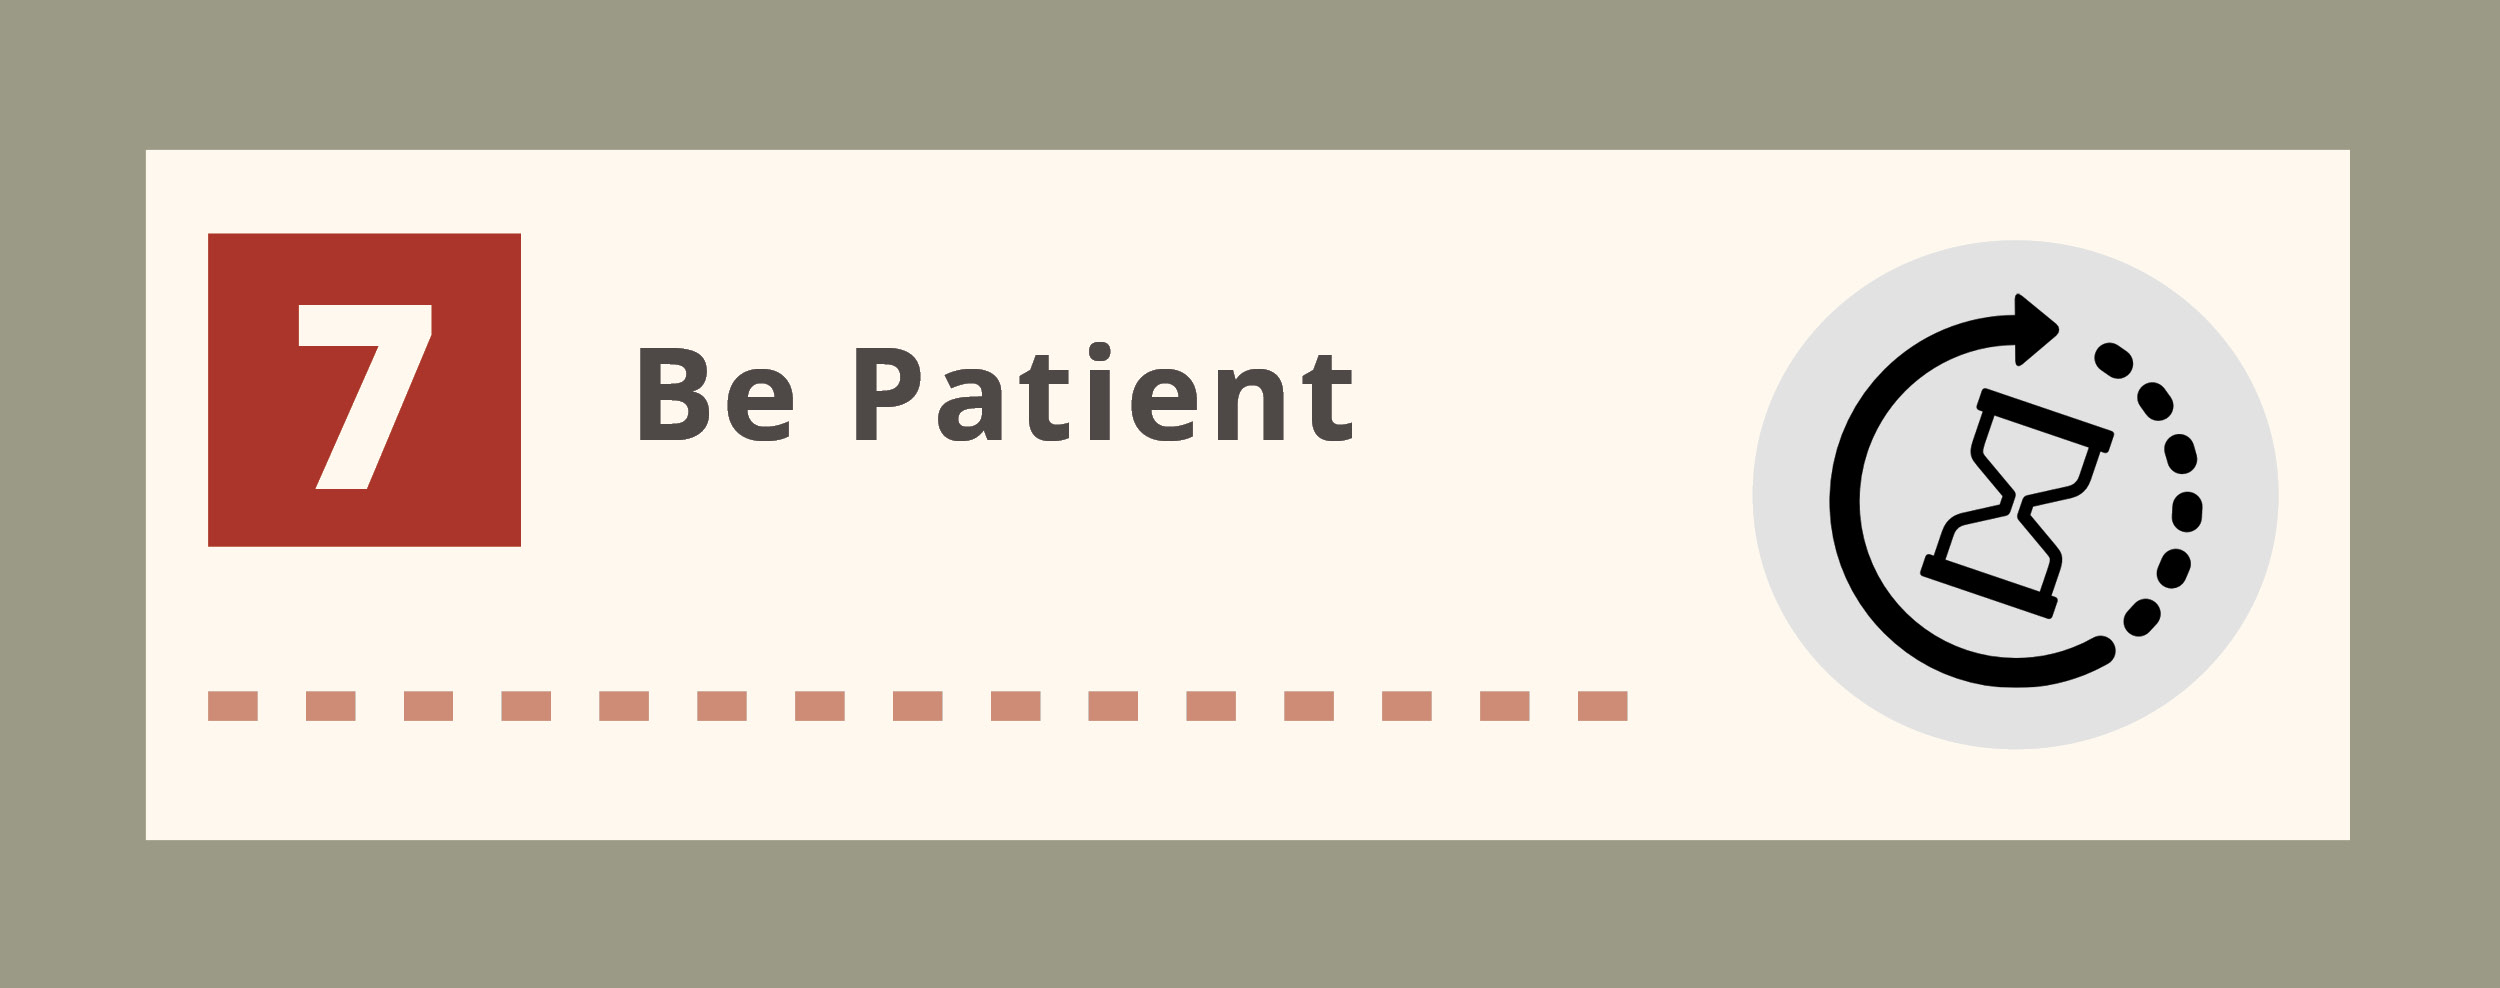 Be patient text